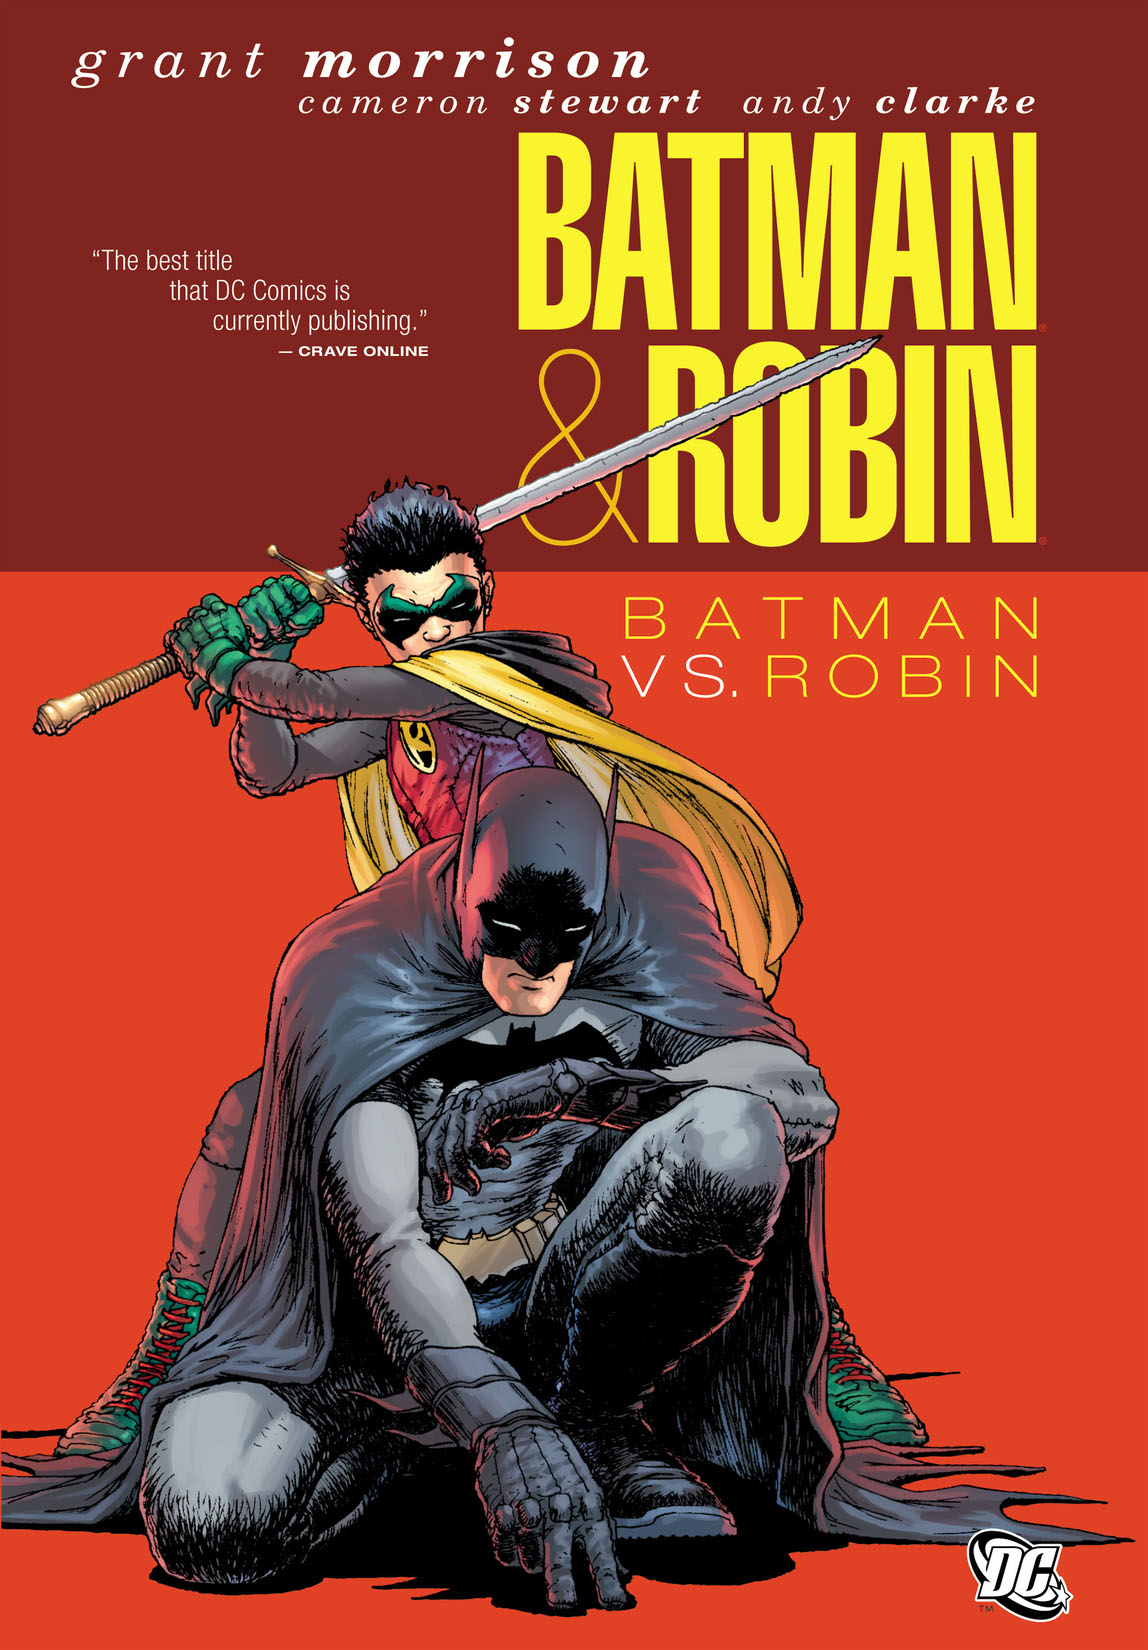 Batman and Robin Vol. 2: Batman vs. Robin (Deluxe Edition) preview images